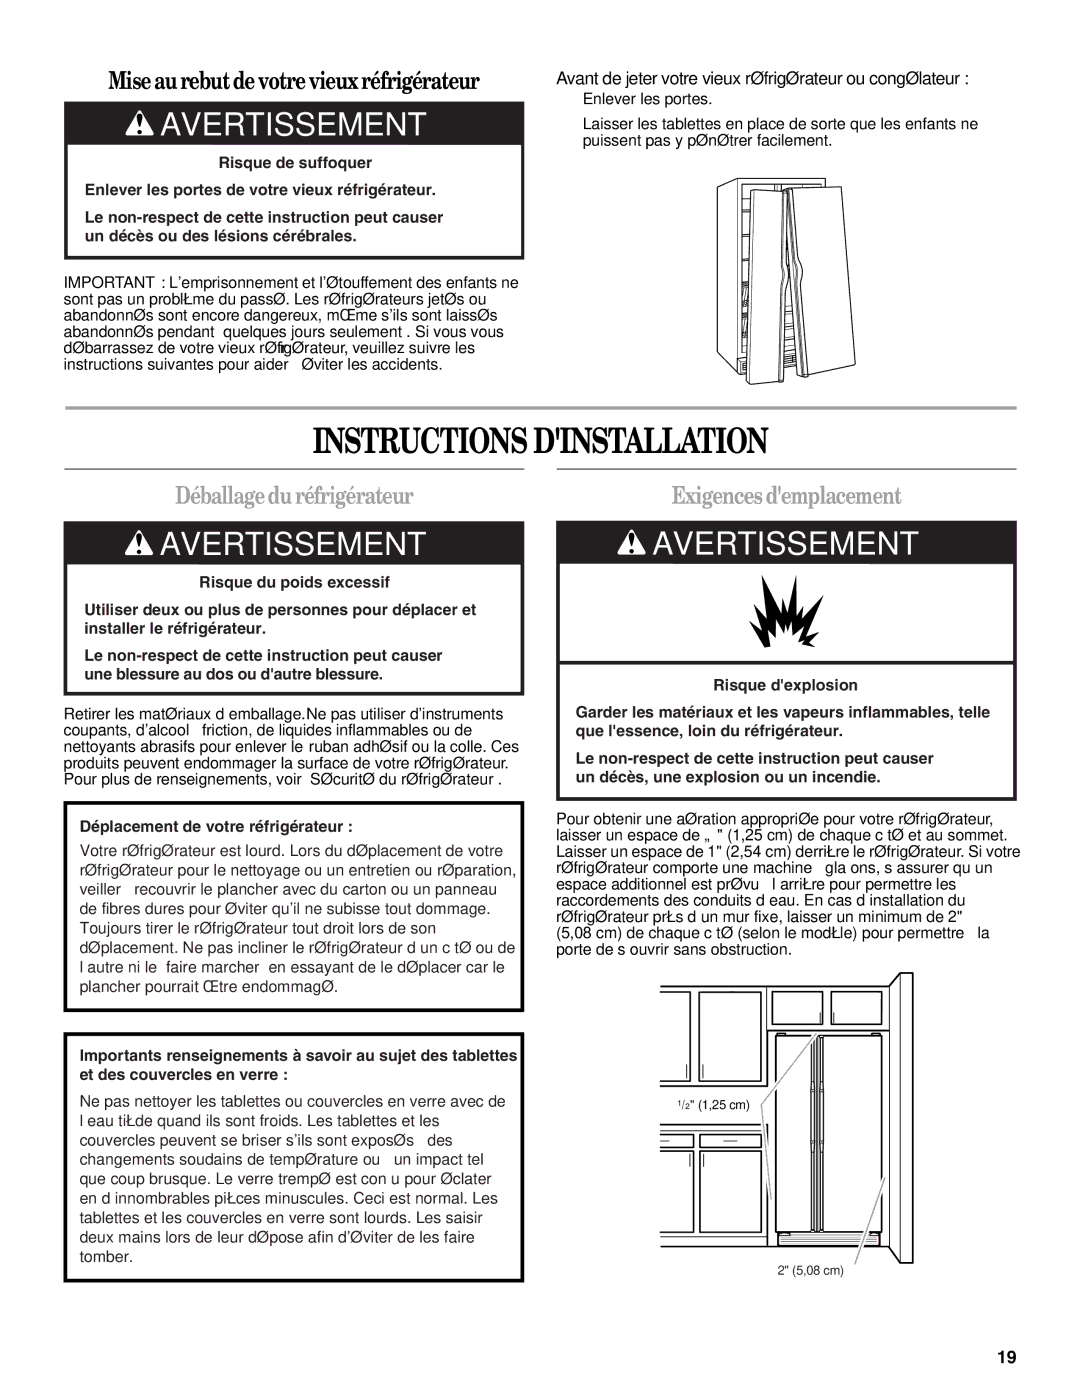 Amana W10321484A installation instructions Instructions Dinstallation, Déballagedu réfrigérateur, Exigences demplacement 